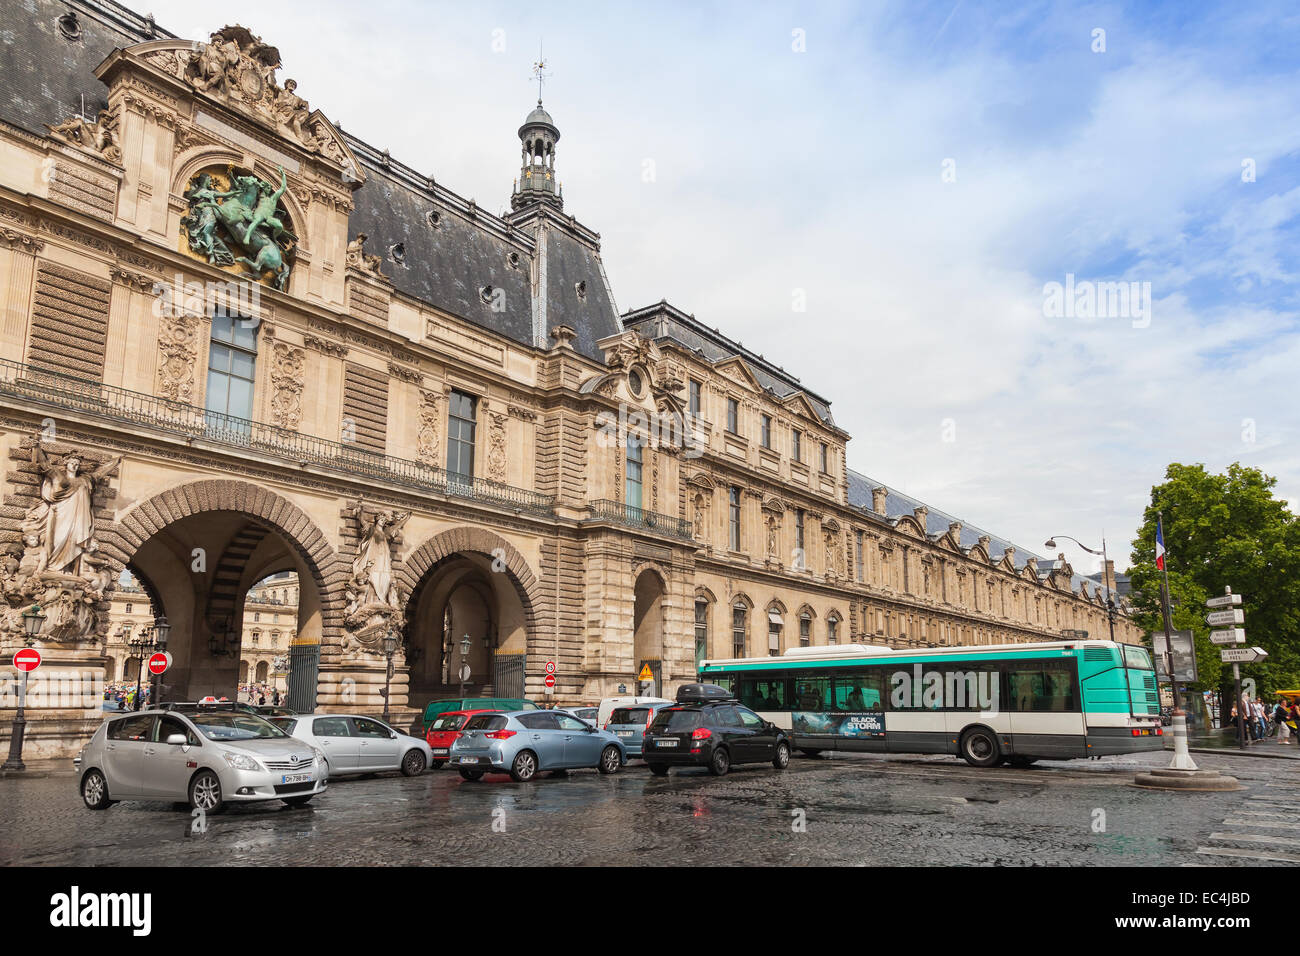 Paris, France - August 07, 2014: Facade of The Louvre museum with entrance gates, Paris Stock Photo